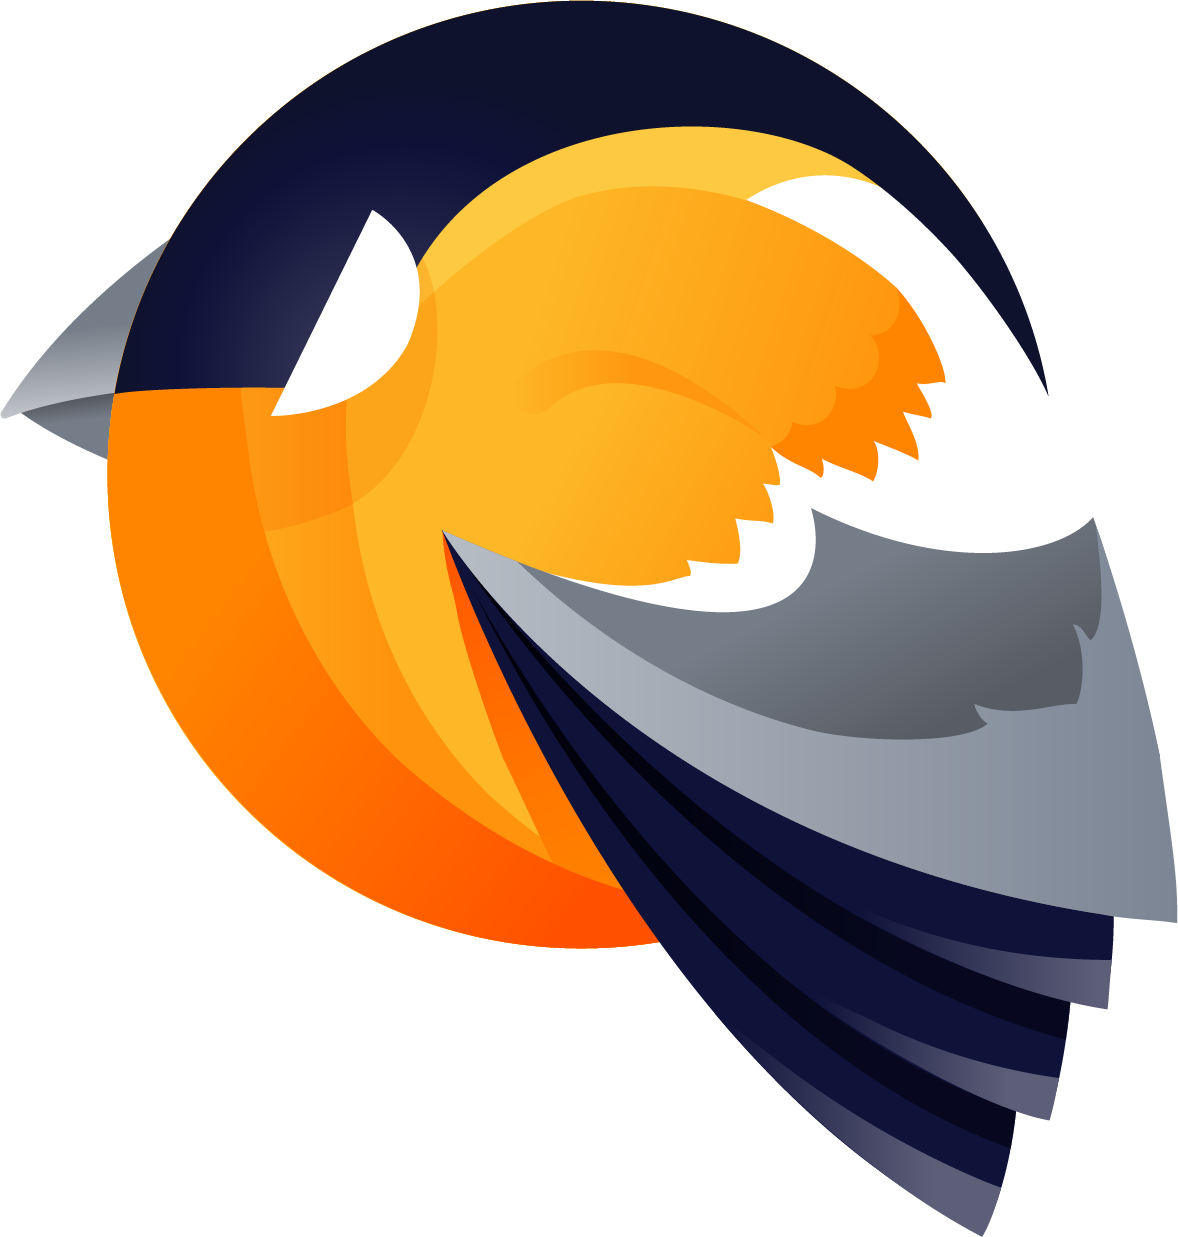 Finch bird logo design graphic art ILLUSTRATION 